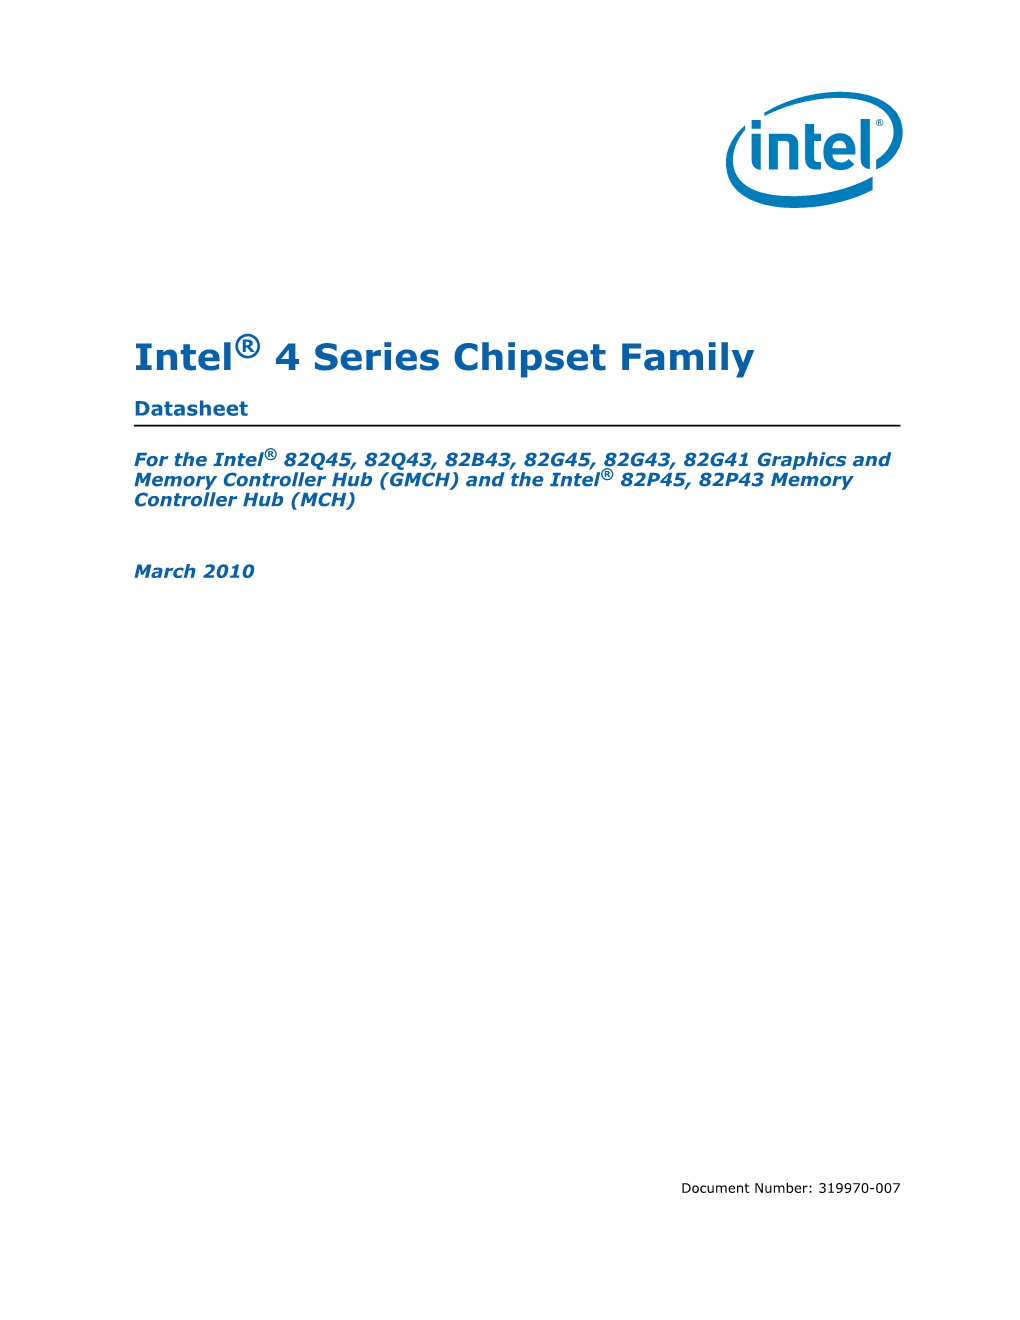 Intel® 4 Series Chipset Family Datasheet